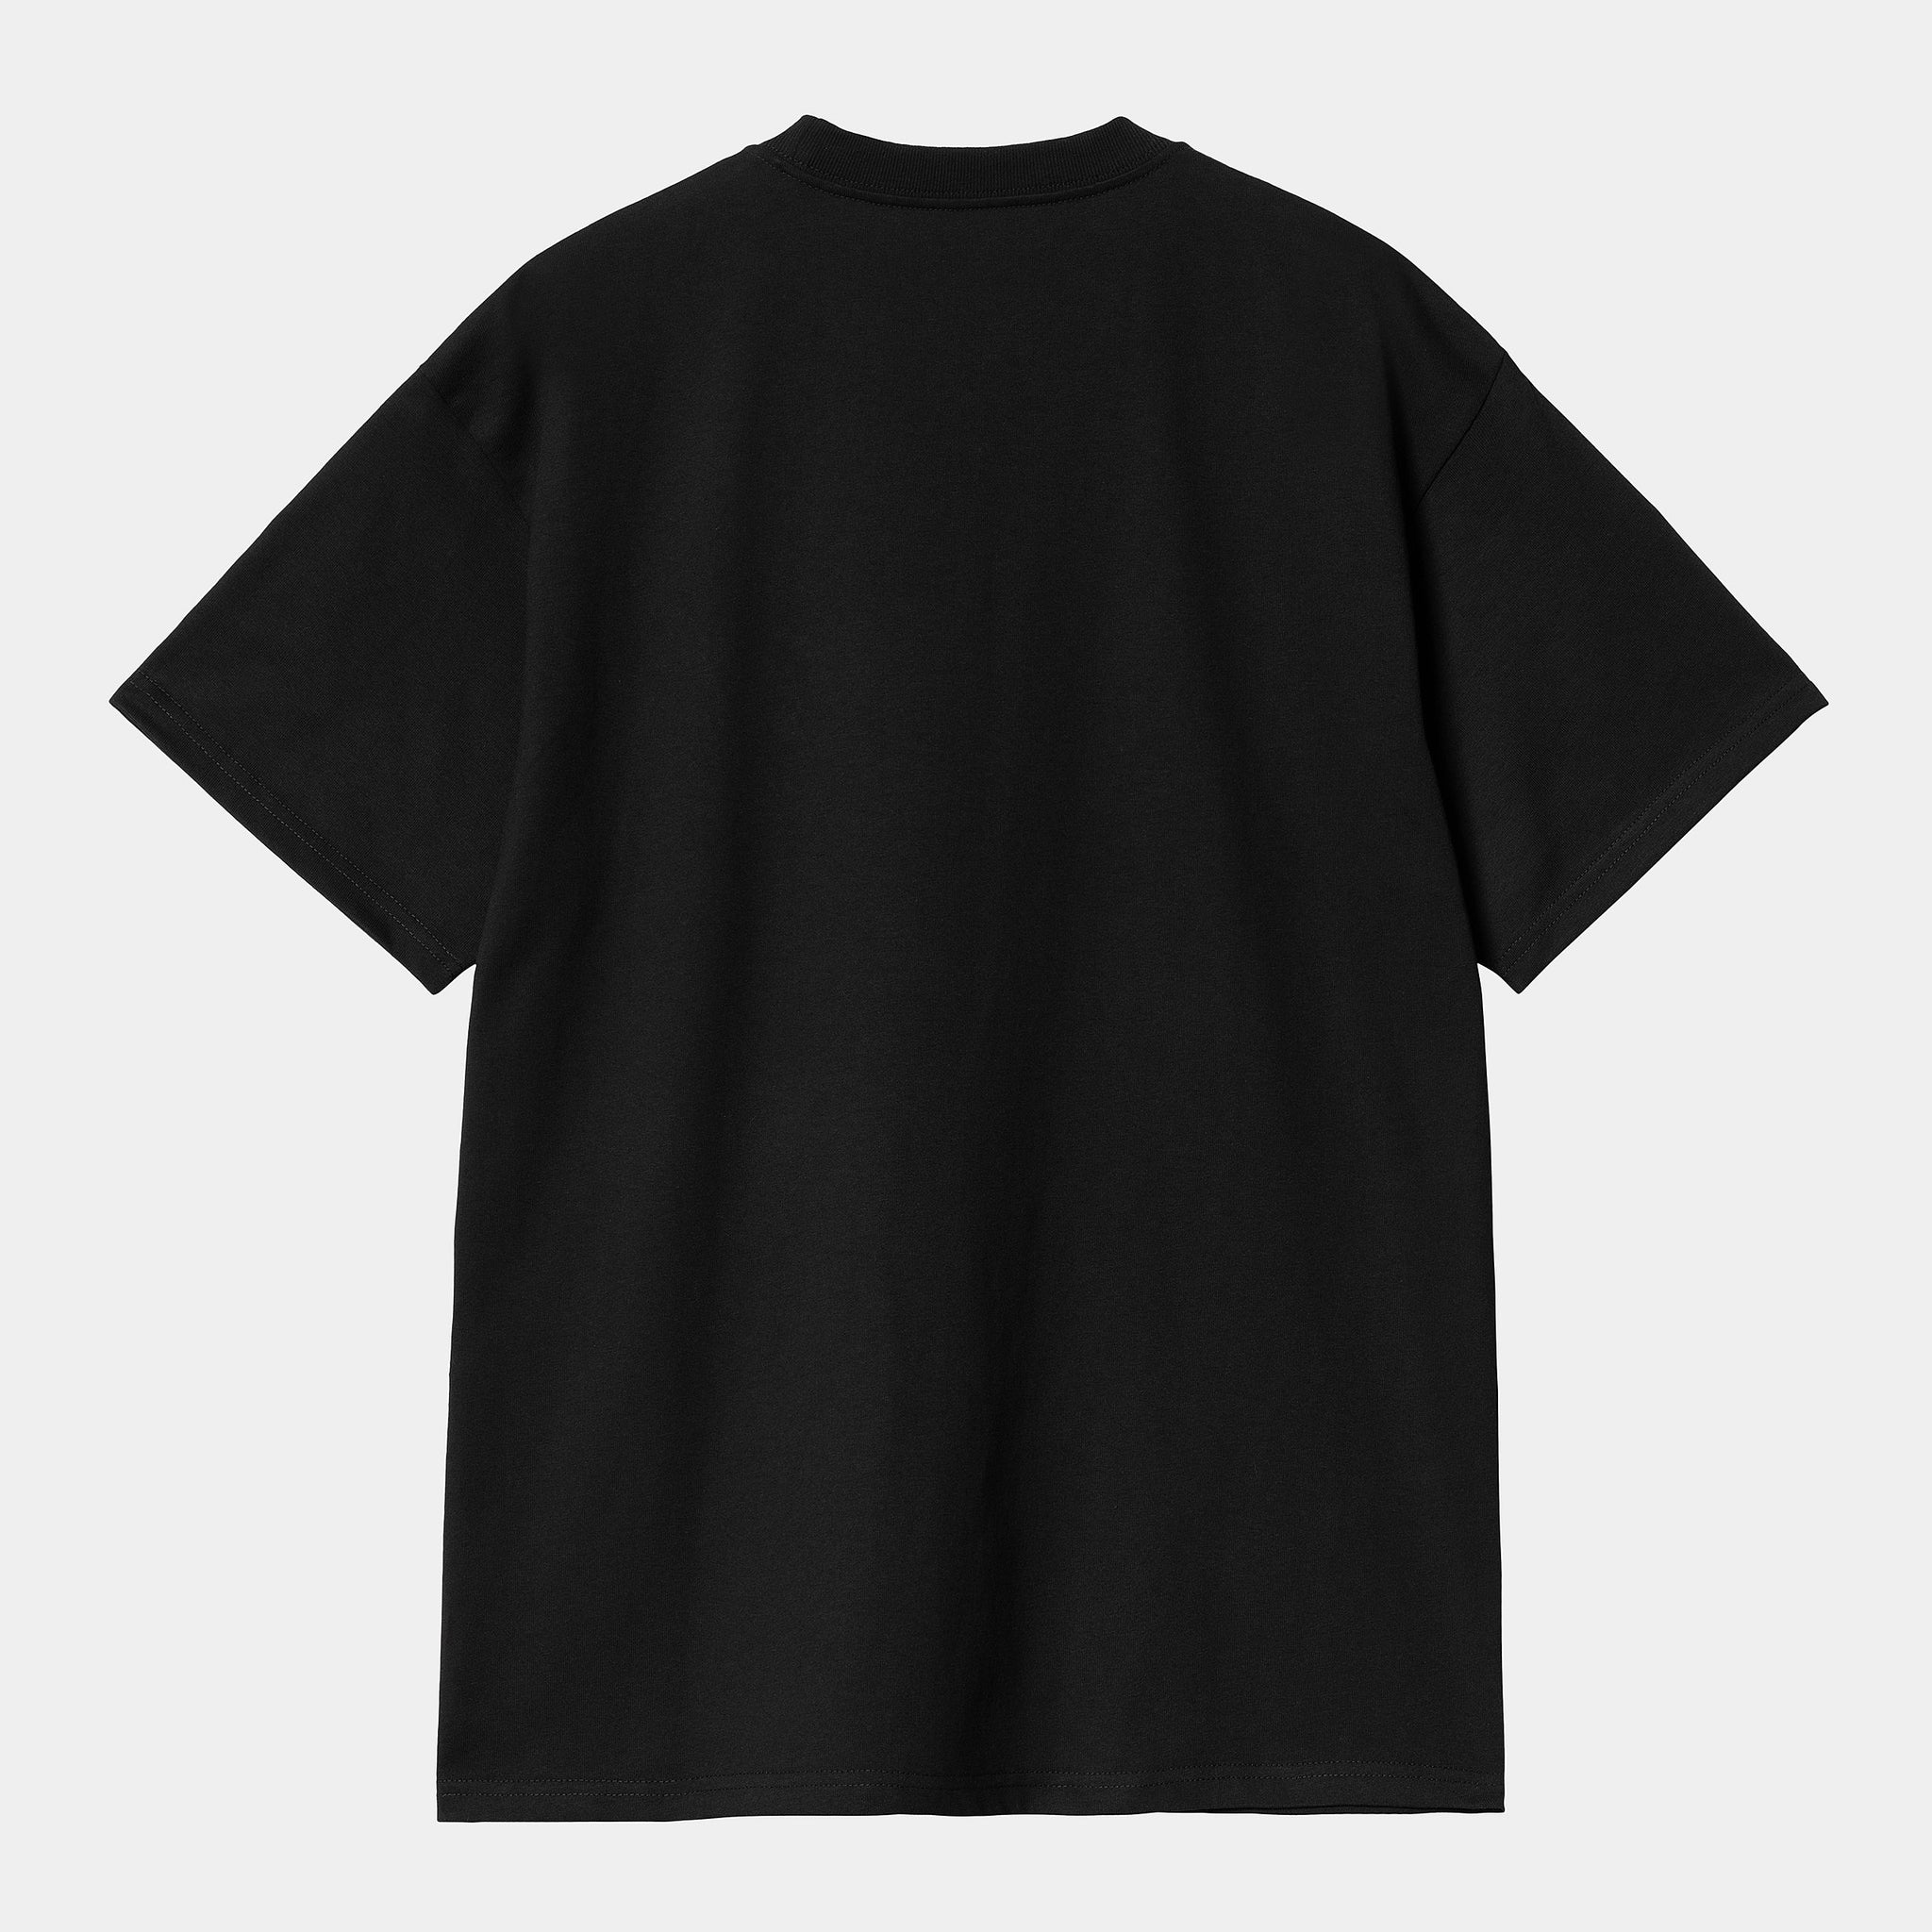 Carhartt WIP S/S Icons T-Shirt Black